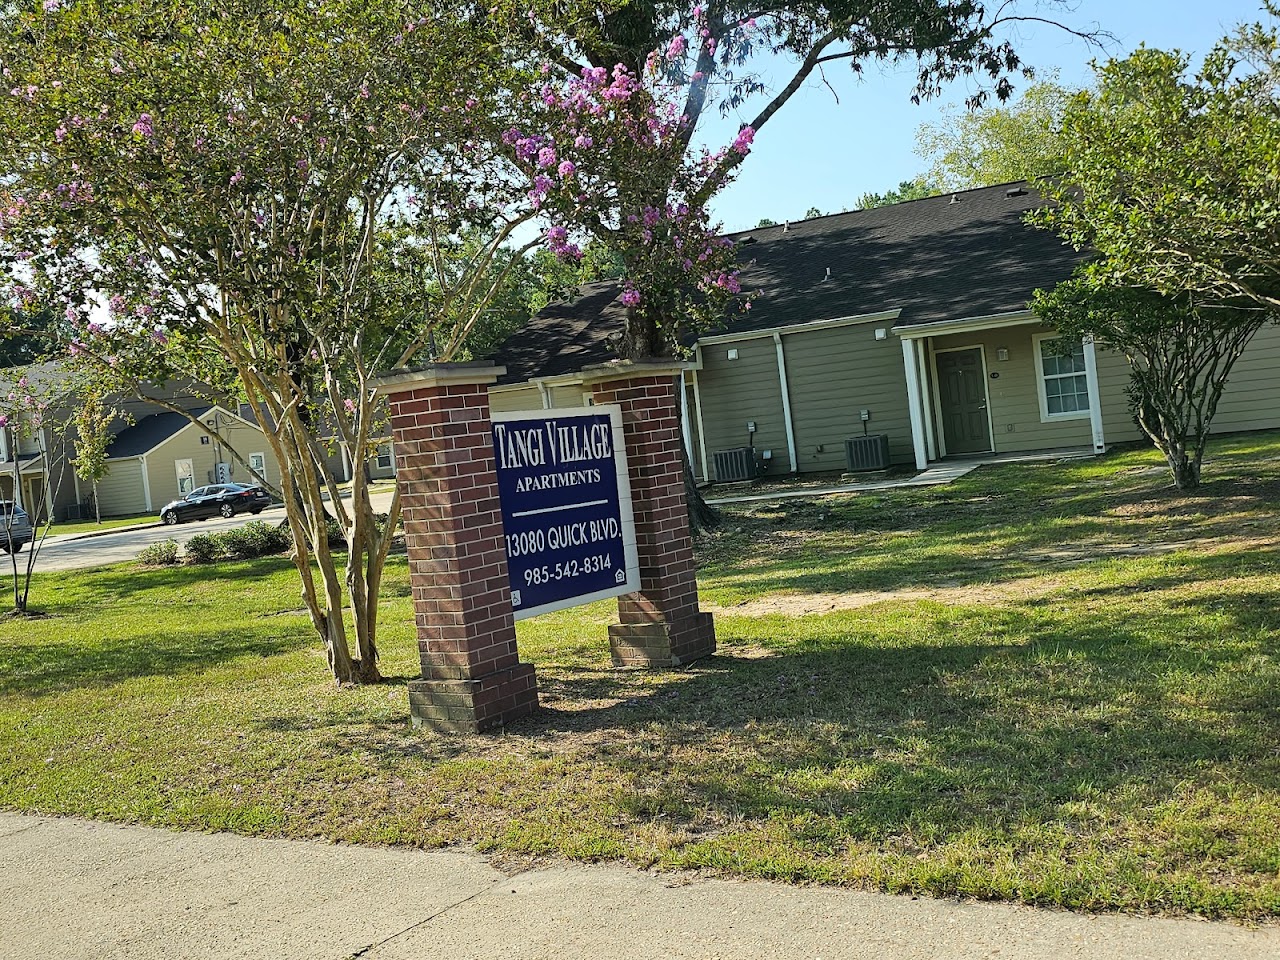 Photo of TANGI VILLAGE. Affordable housing located at 13080 QUICK BLVD HAMMOND, LA 